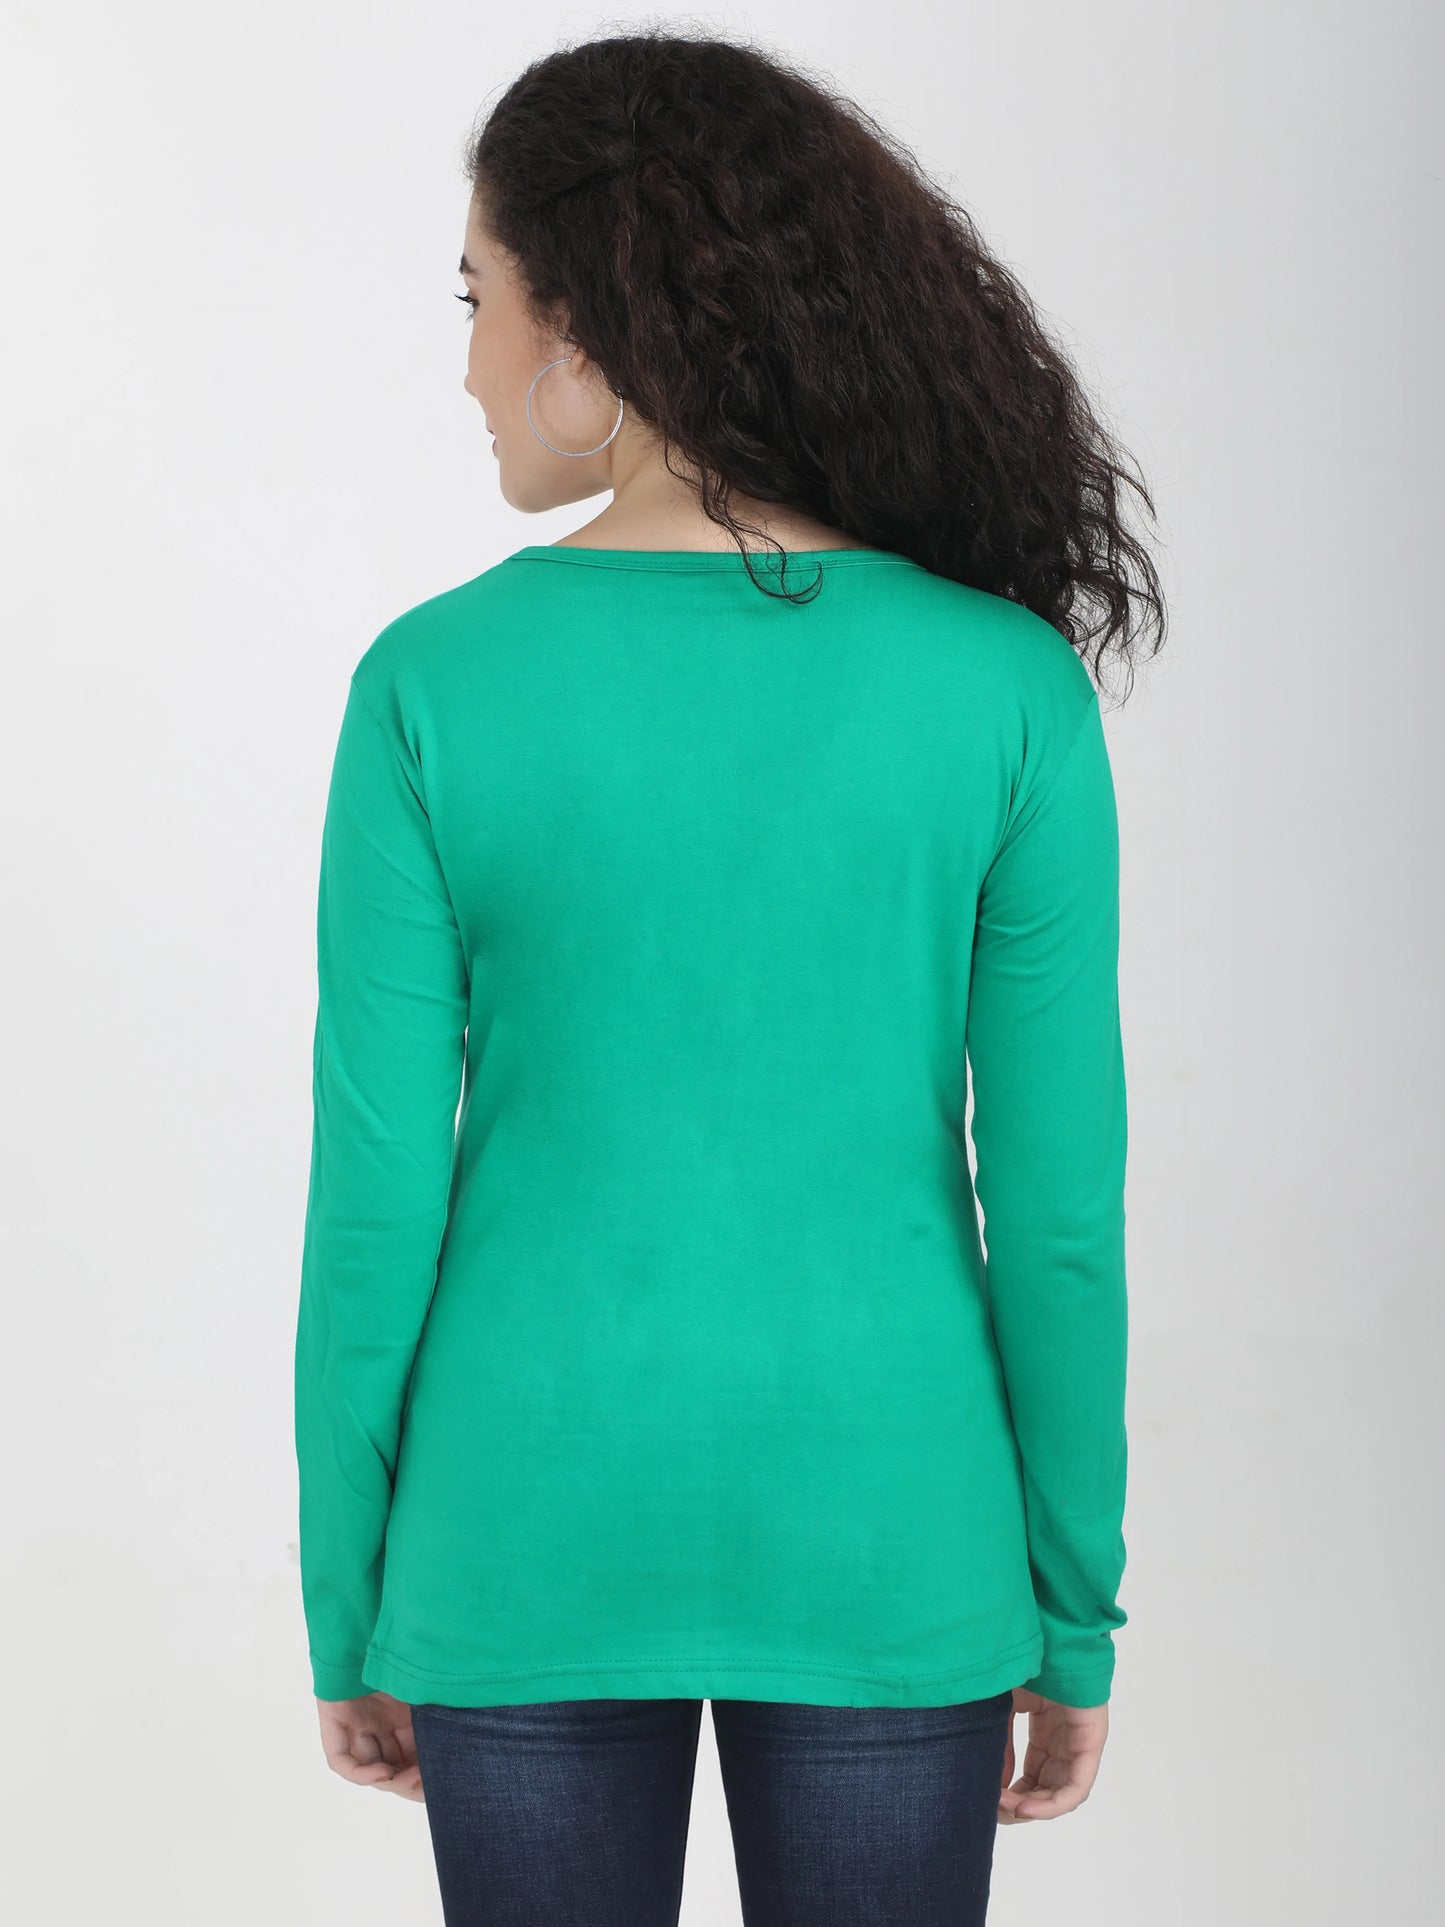 Women's Cotton Plain V Neck Full Sleeve Pakistan Green Color T-Shirt